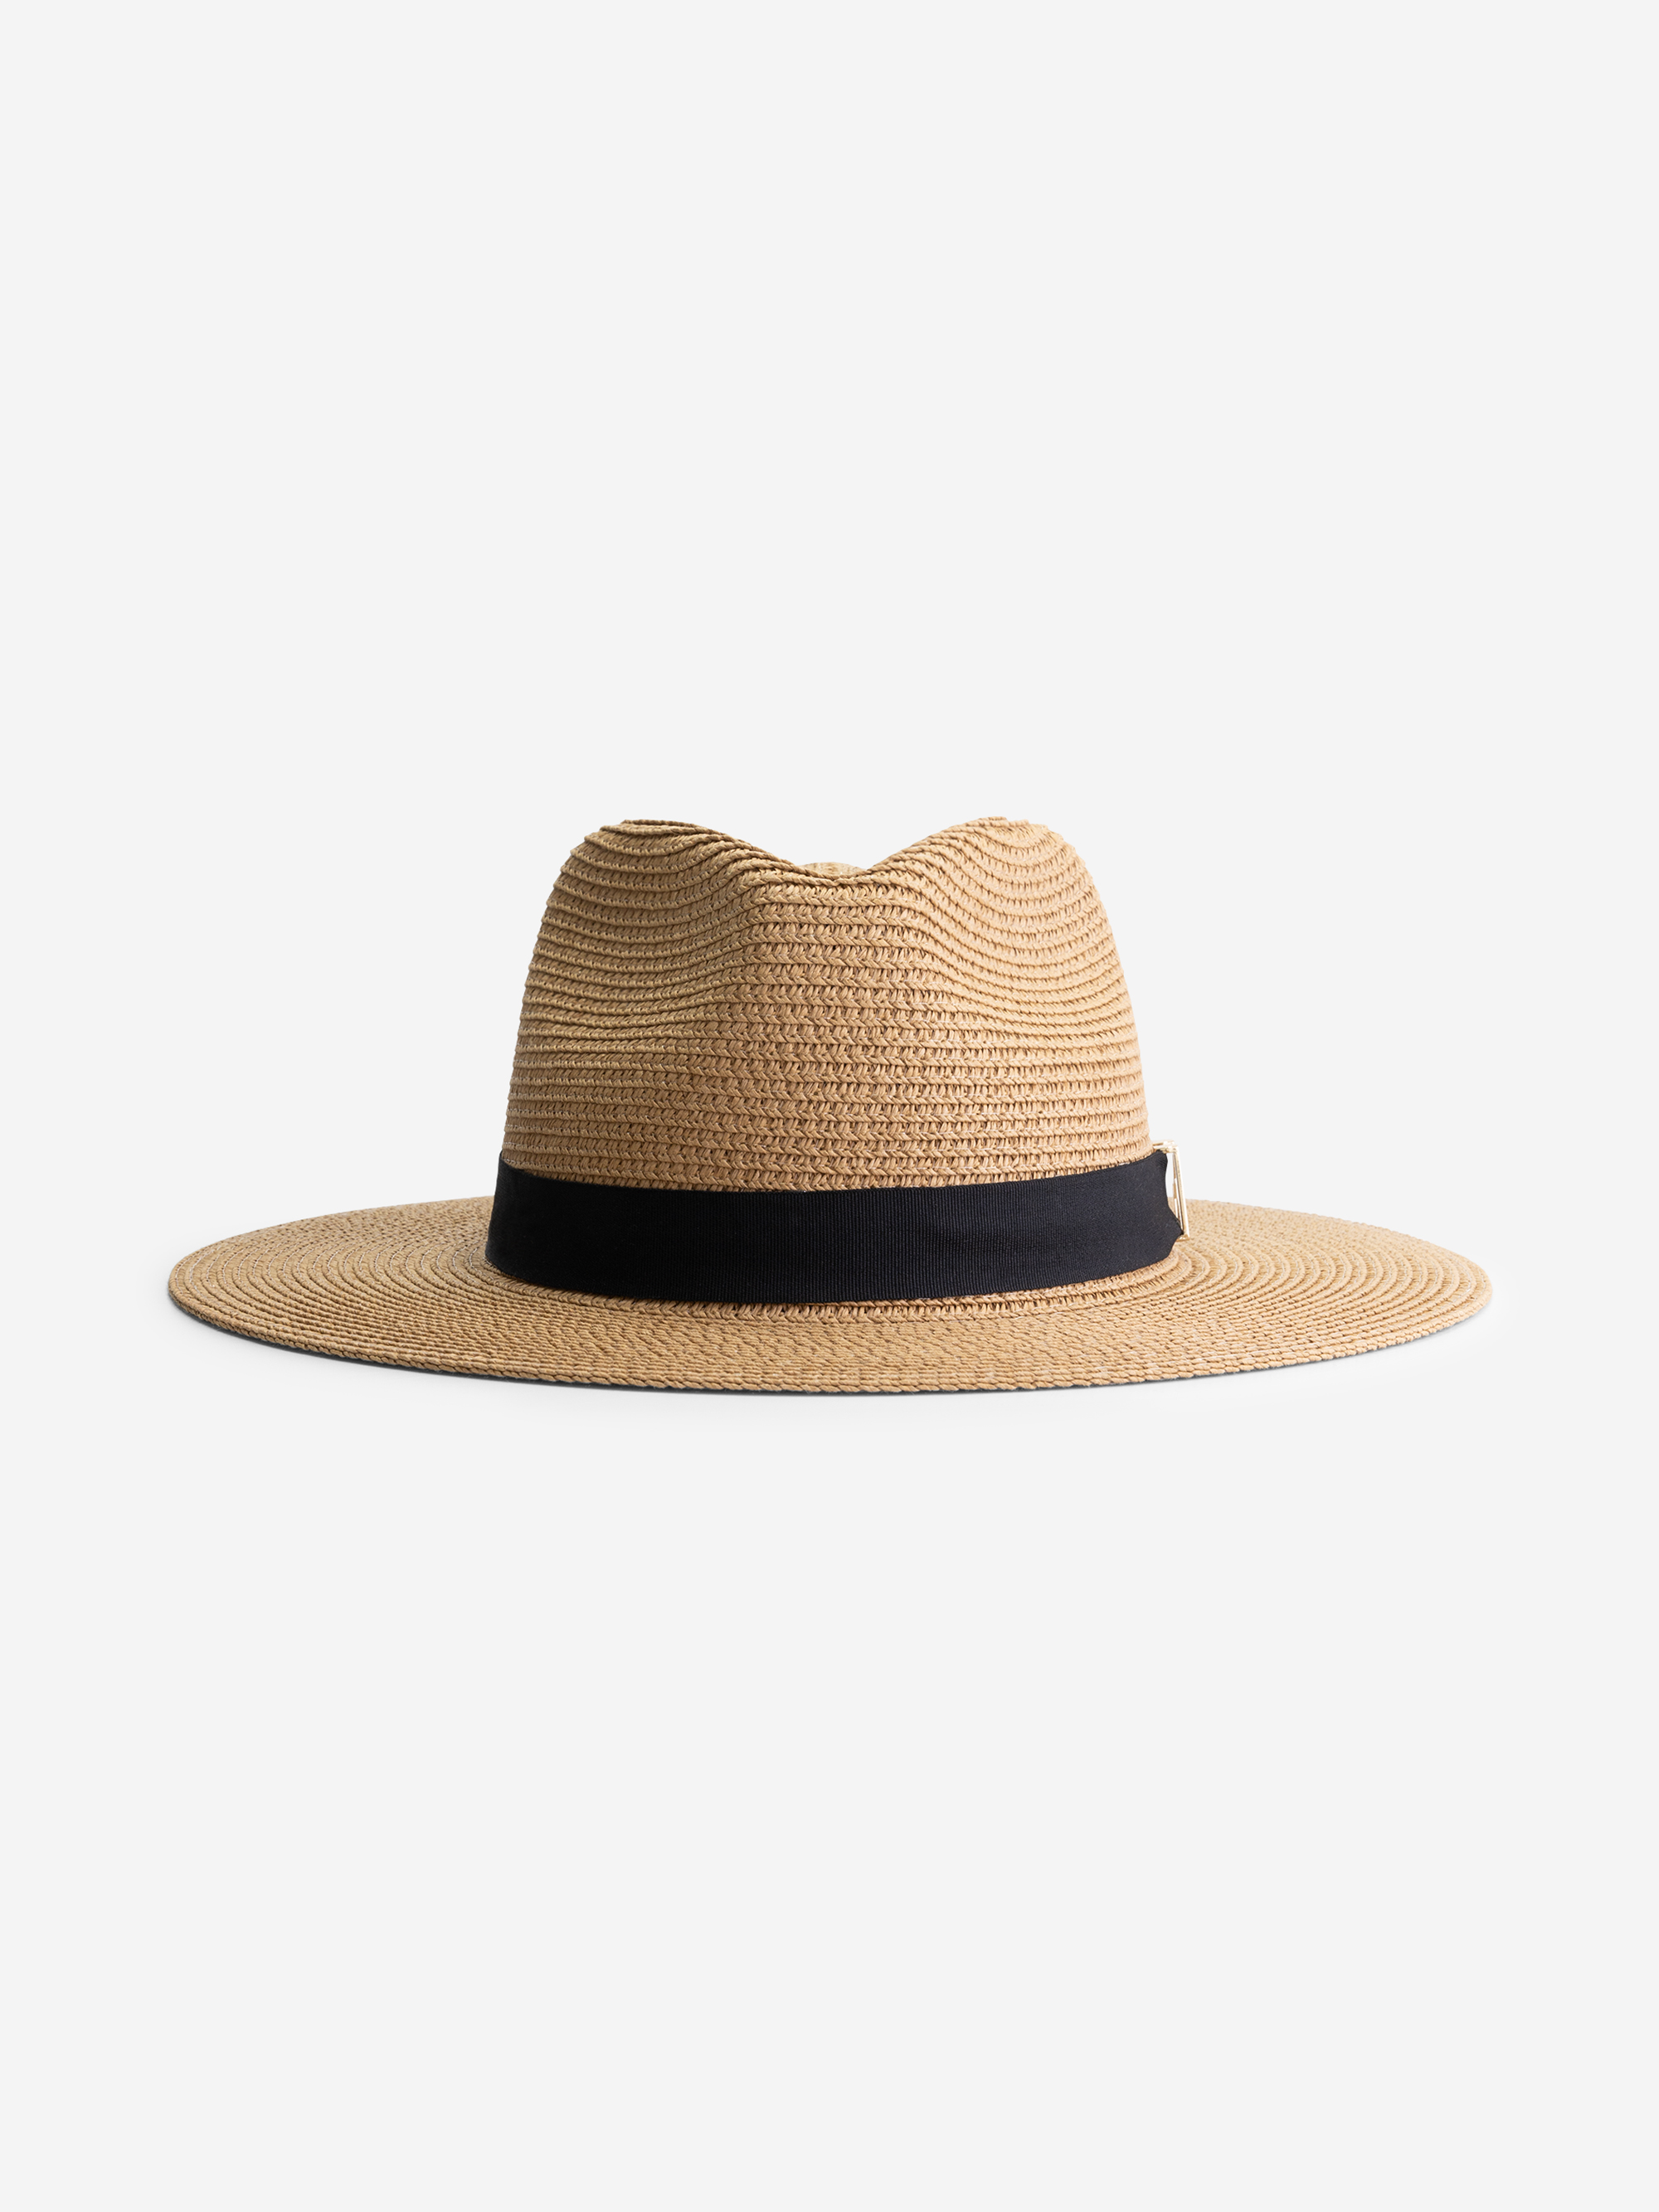 De perfecte zomer hoed